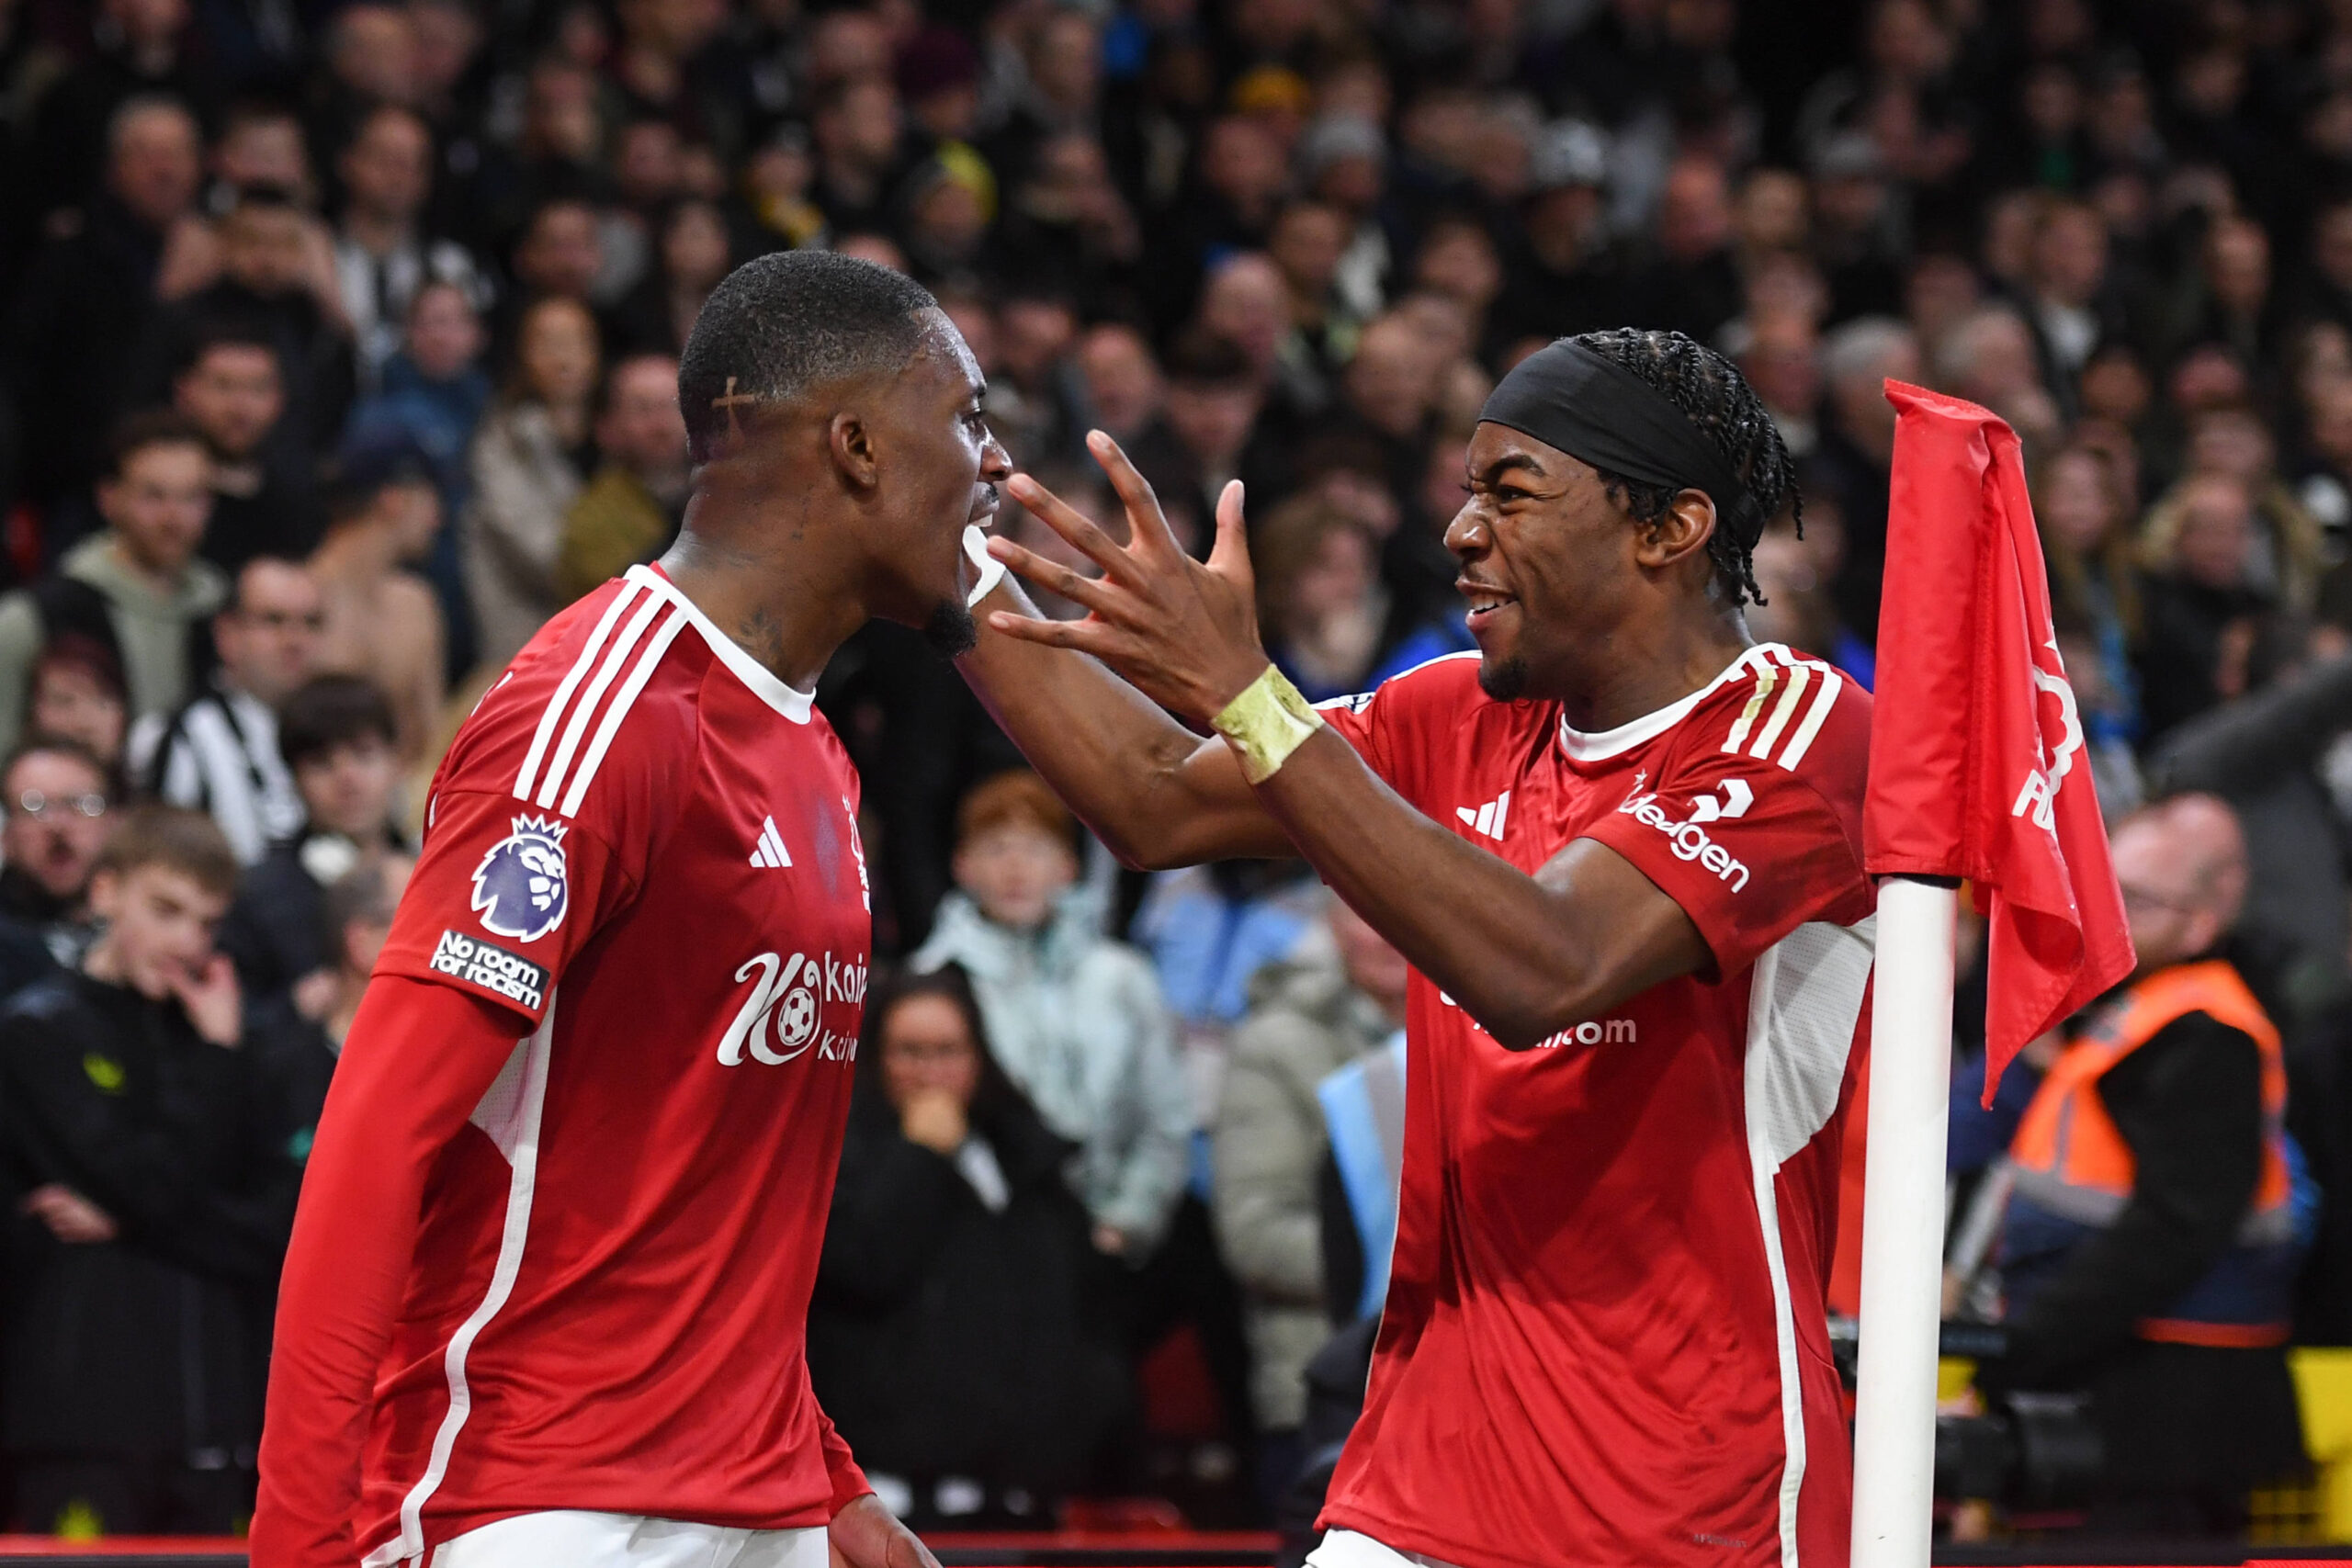 Nottingham Forest's Callum Hudson-Odoi and Anthony Elanga celebrate a goal by the corner flag